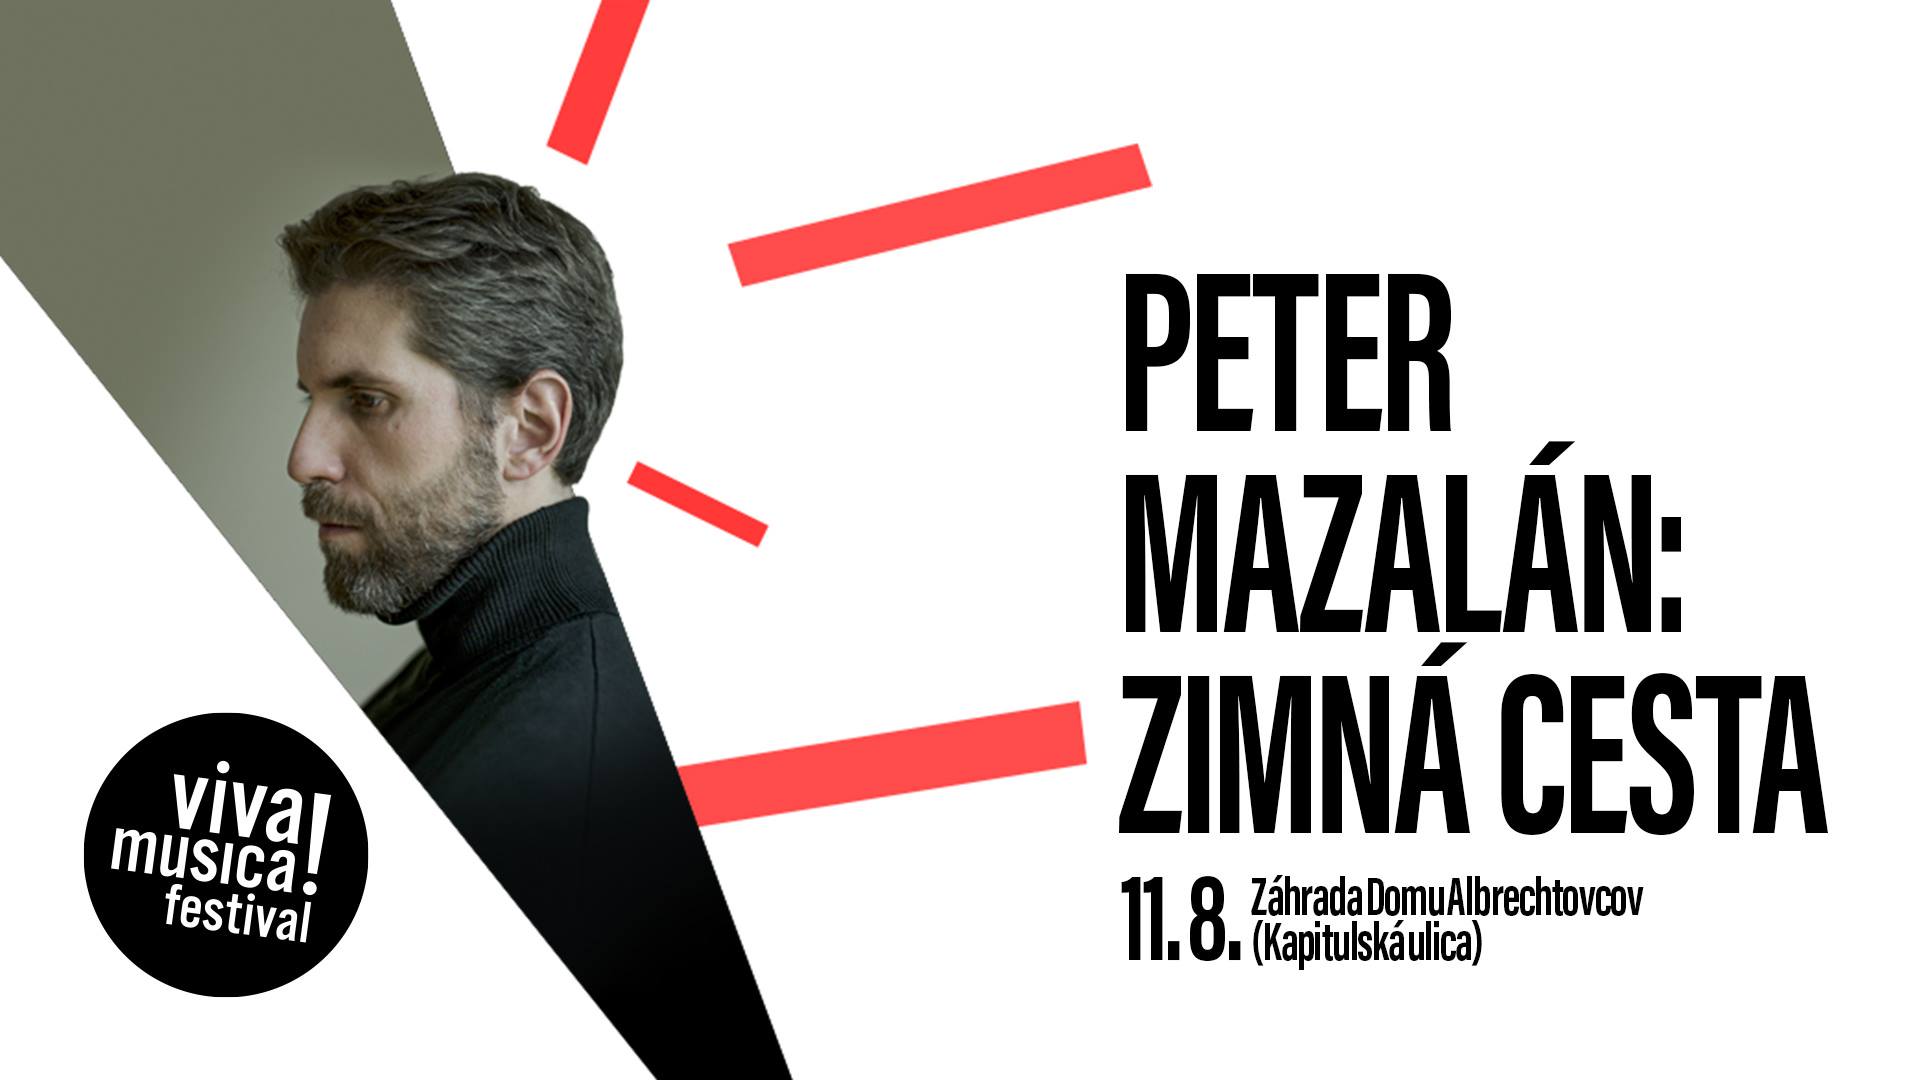 Peter Mazalán: Zimná cesta - Viva Musica! festival 2020